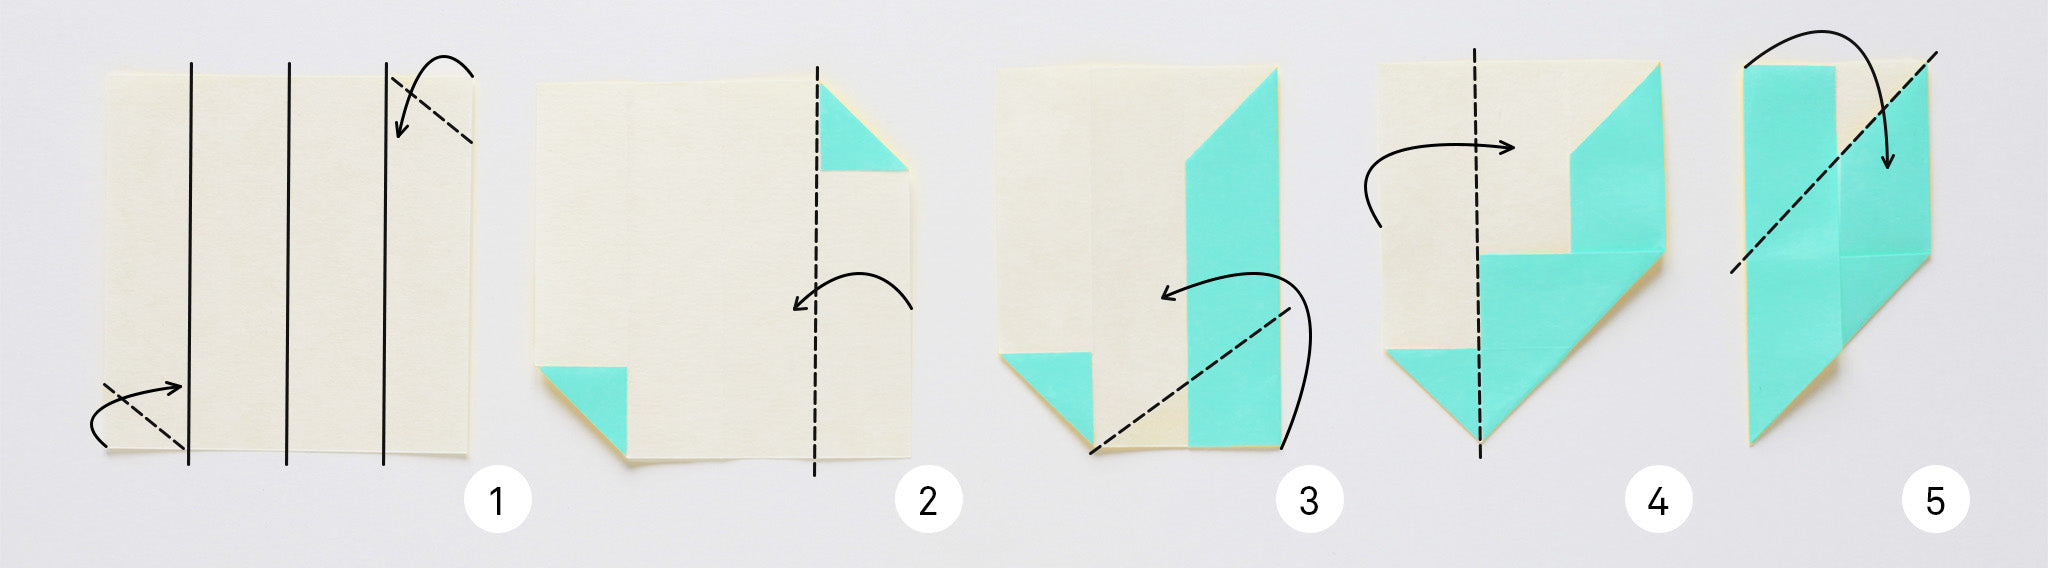 article-tuto-cube-origami-suspendre-pliage-elements-etape-1-5